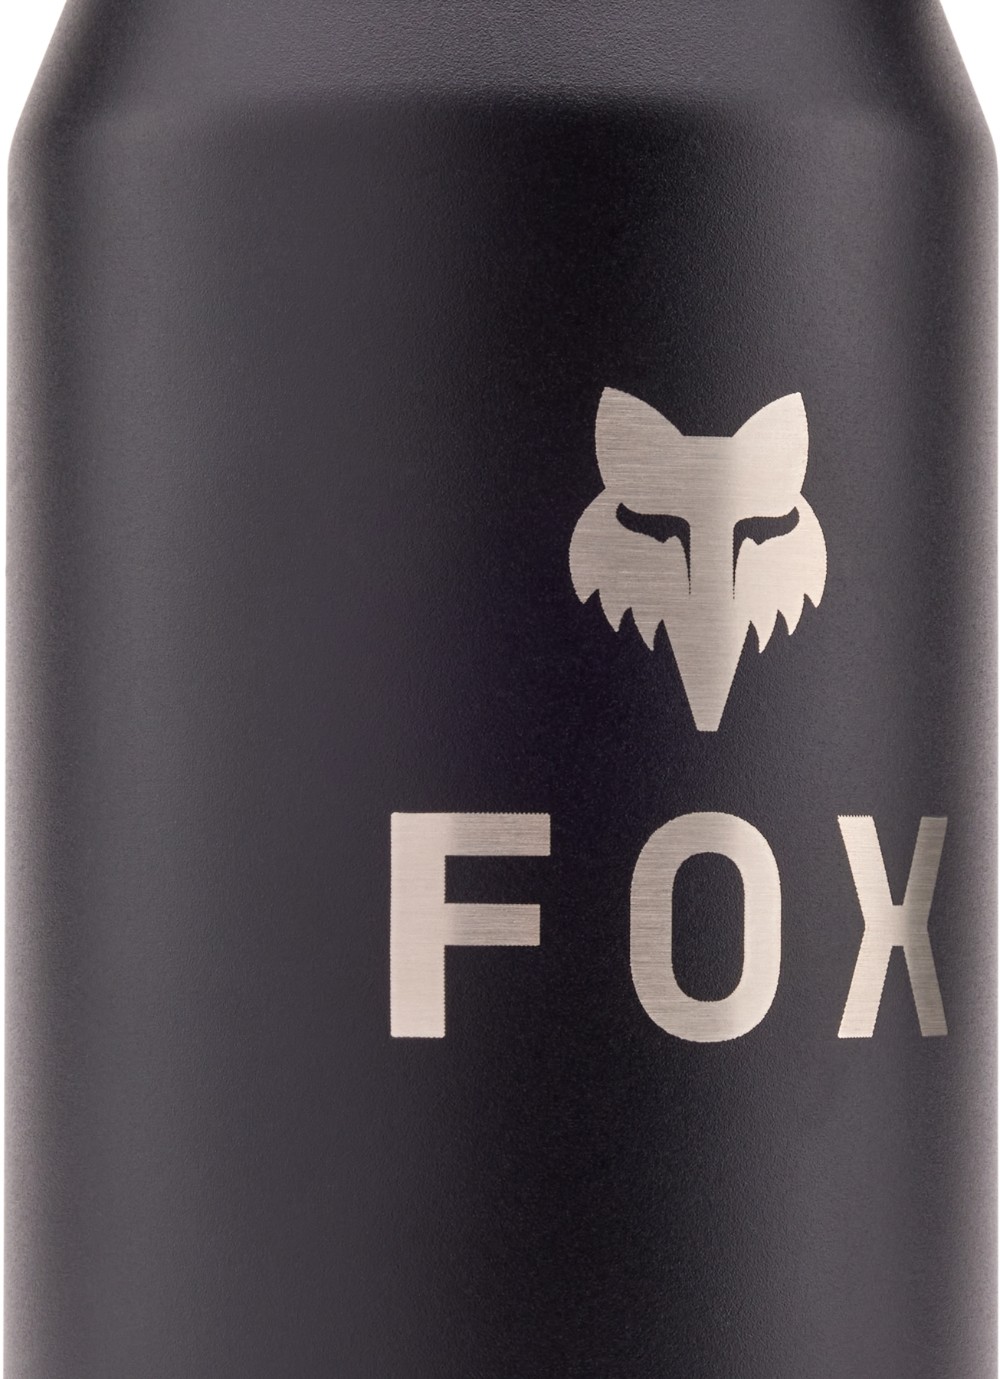 Fox X Camelbak 32oz Bottle image 2